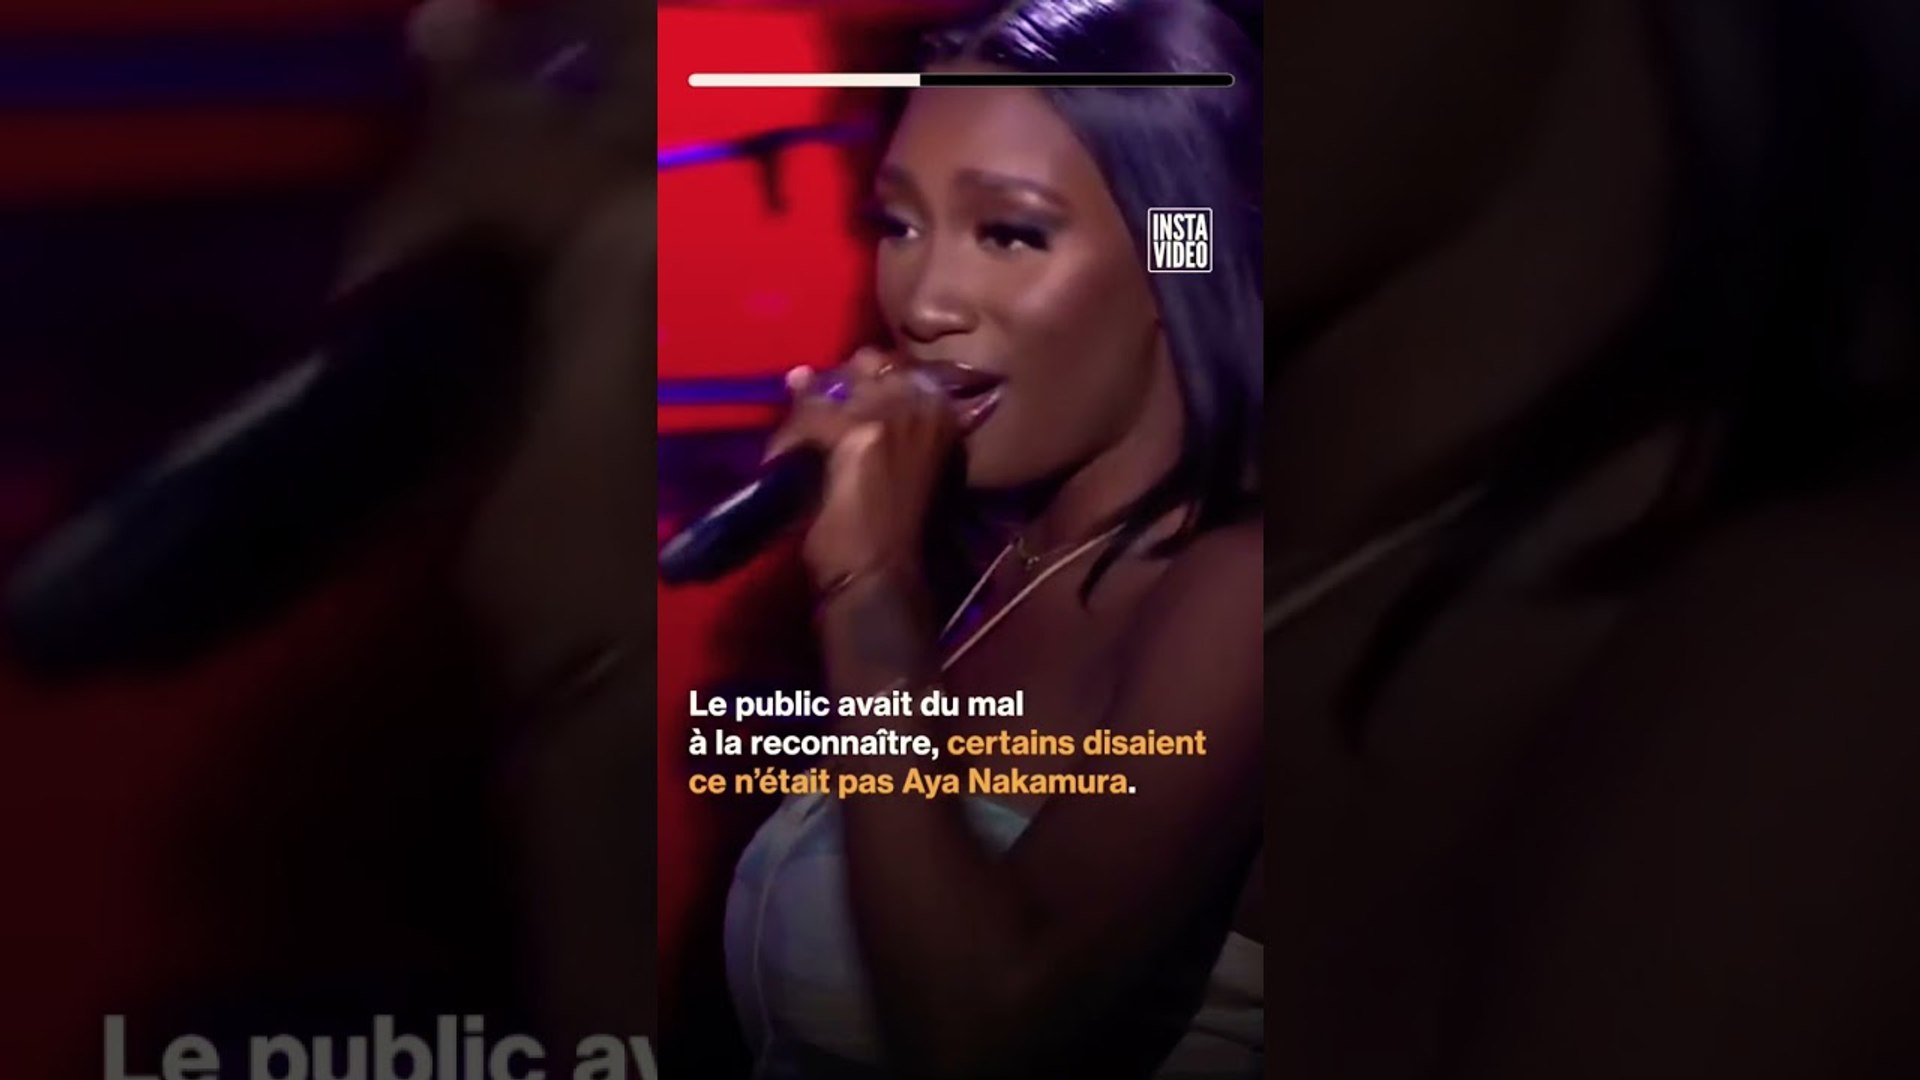 AYA NAKAMURA CHOQUE LA TOILE APRÈS SA PERTE DE POIDS ! - Vidéo Dailymotion